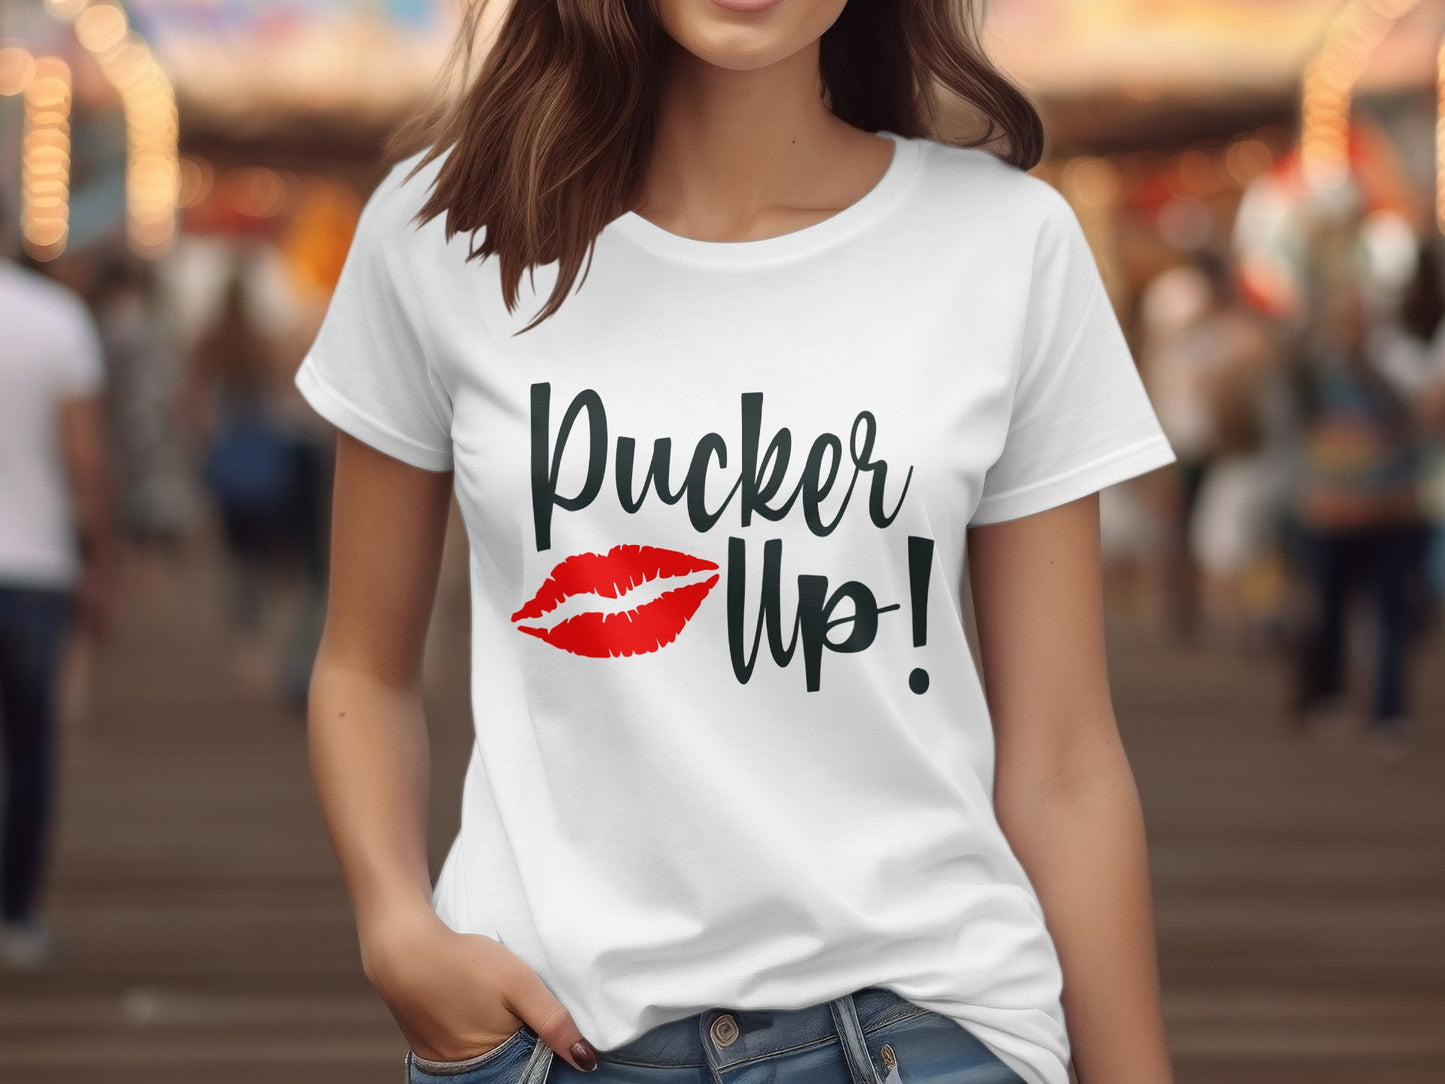 Pucker Up!